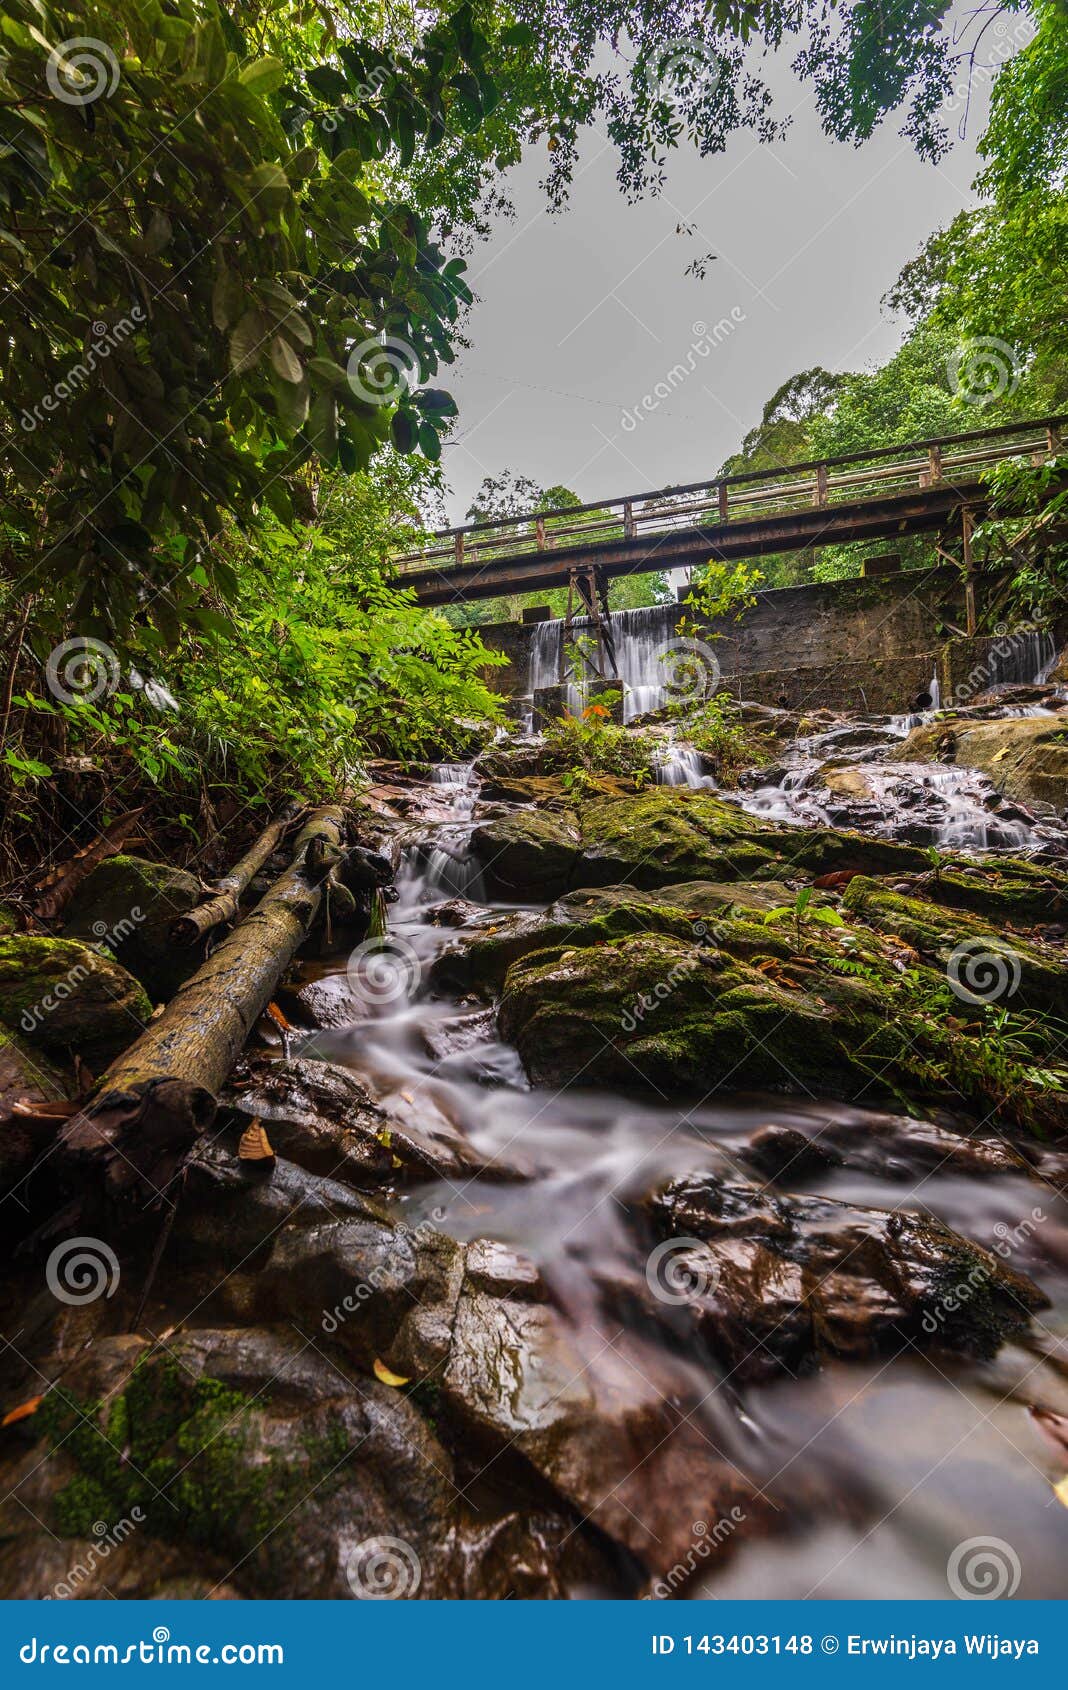 green forest with mini waterfall t at batam bintan indonesia